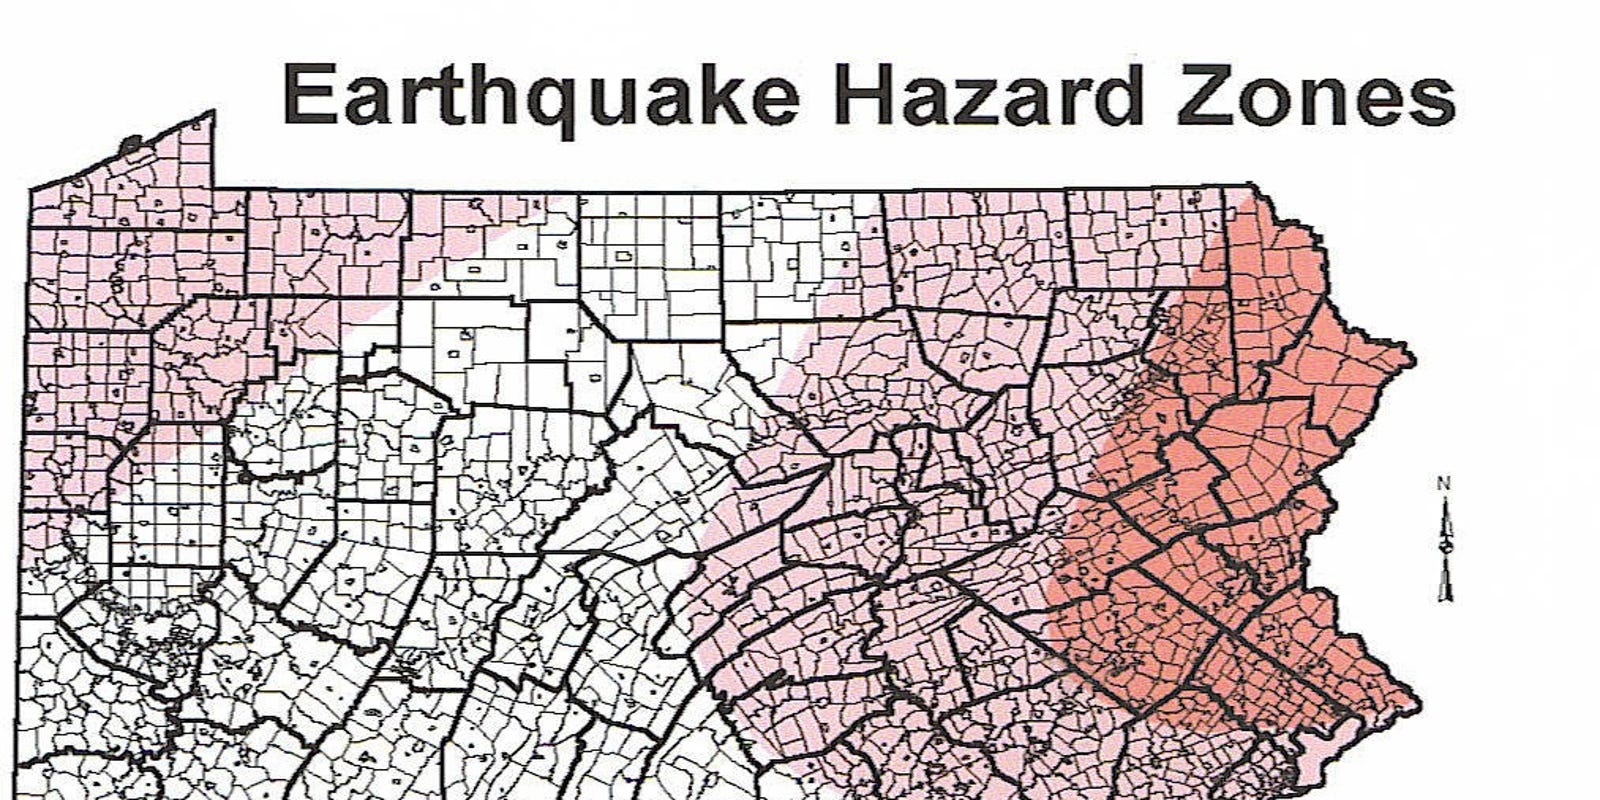 How big was Pennsylvania's worst earthquake?